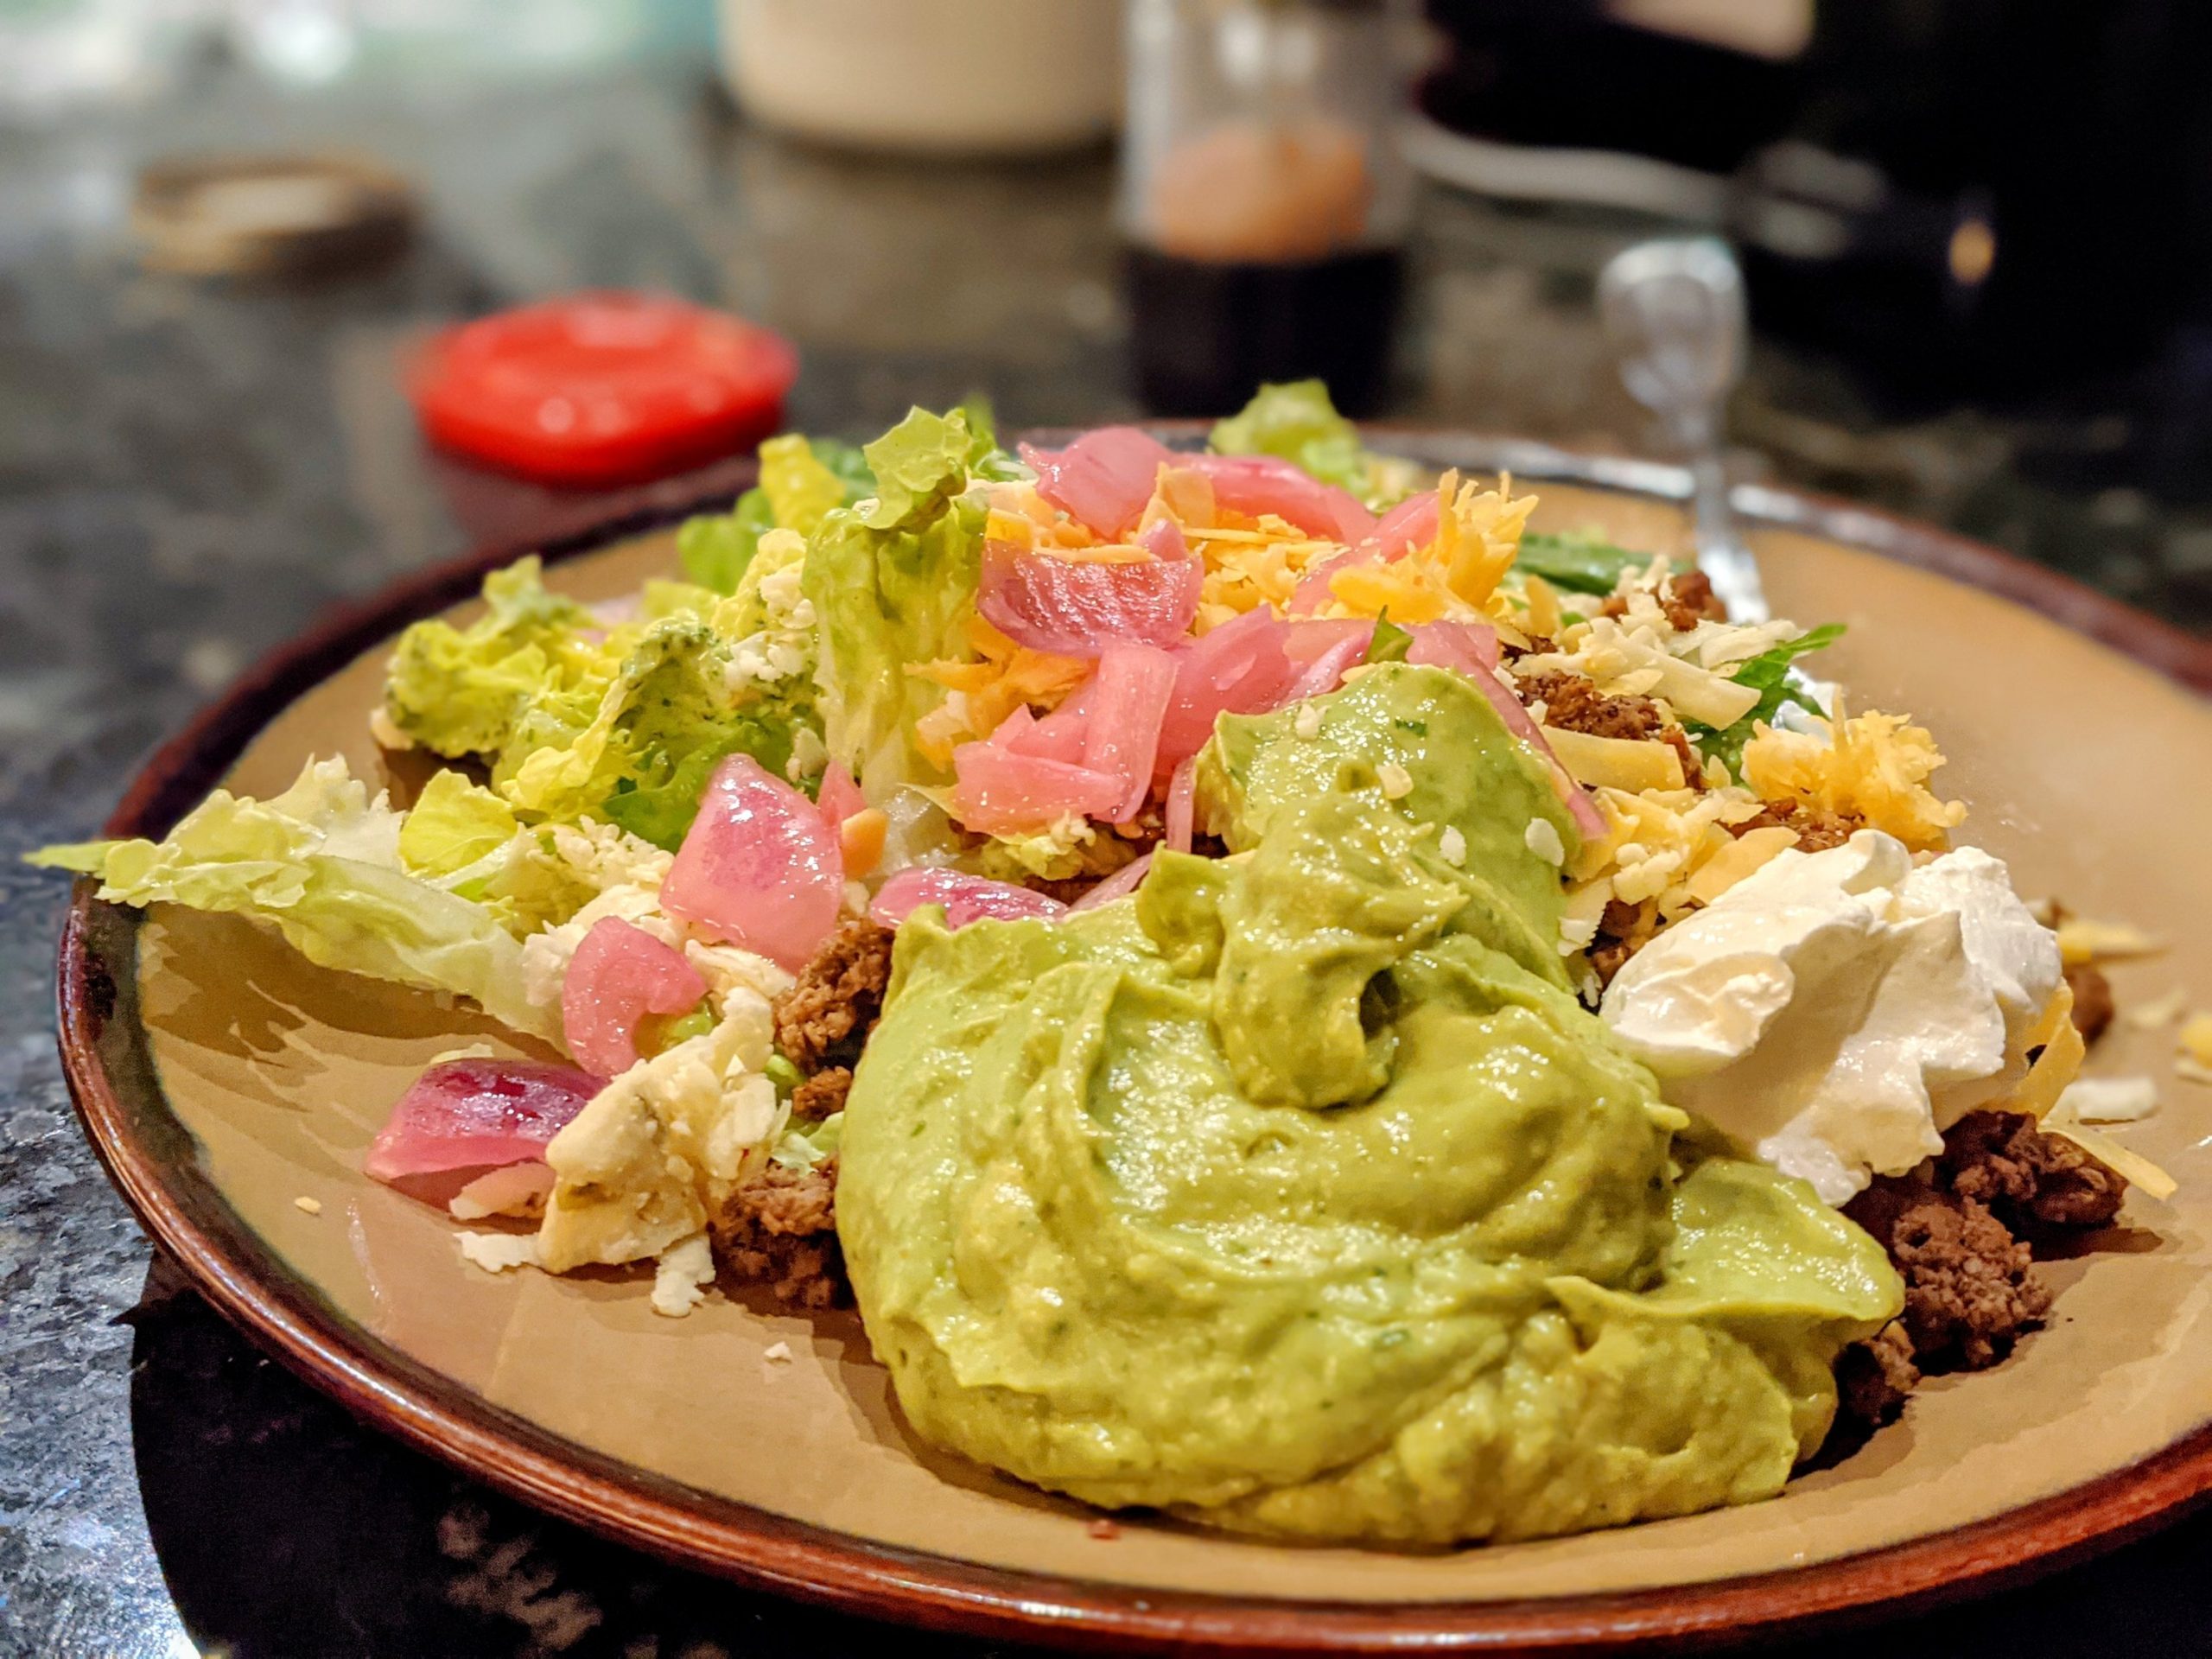 cilantro salad dressing